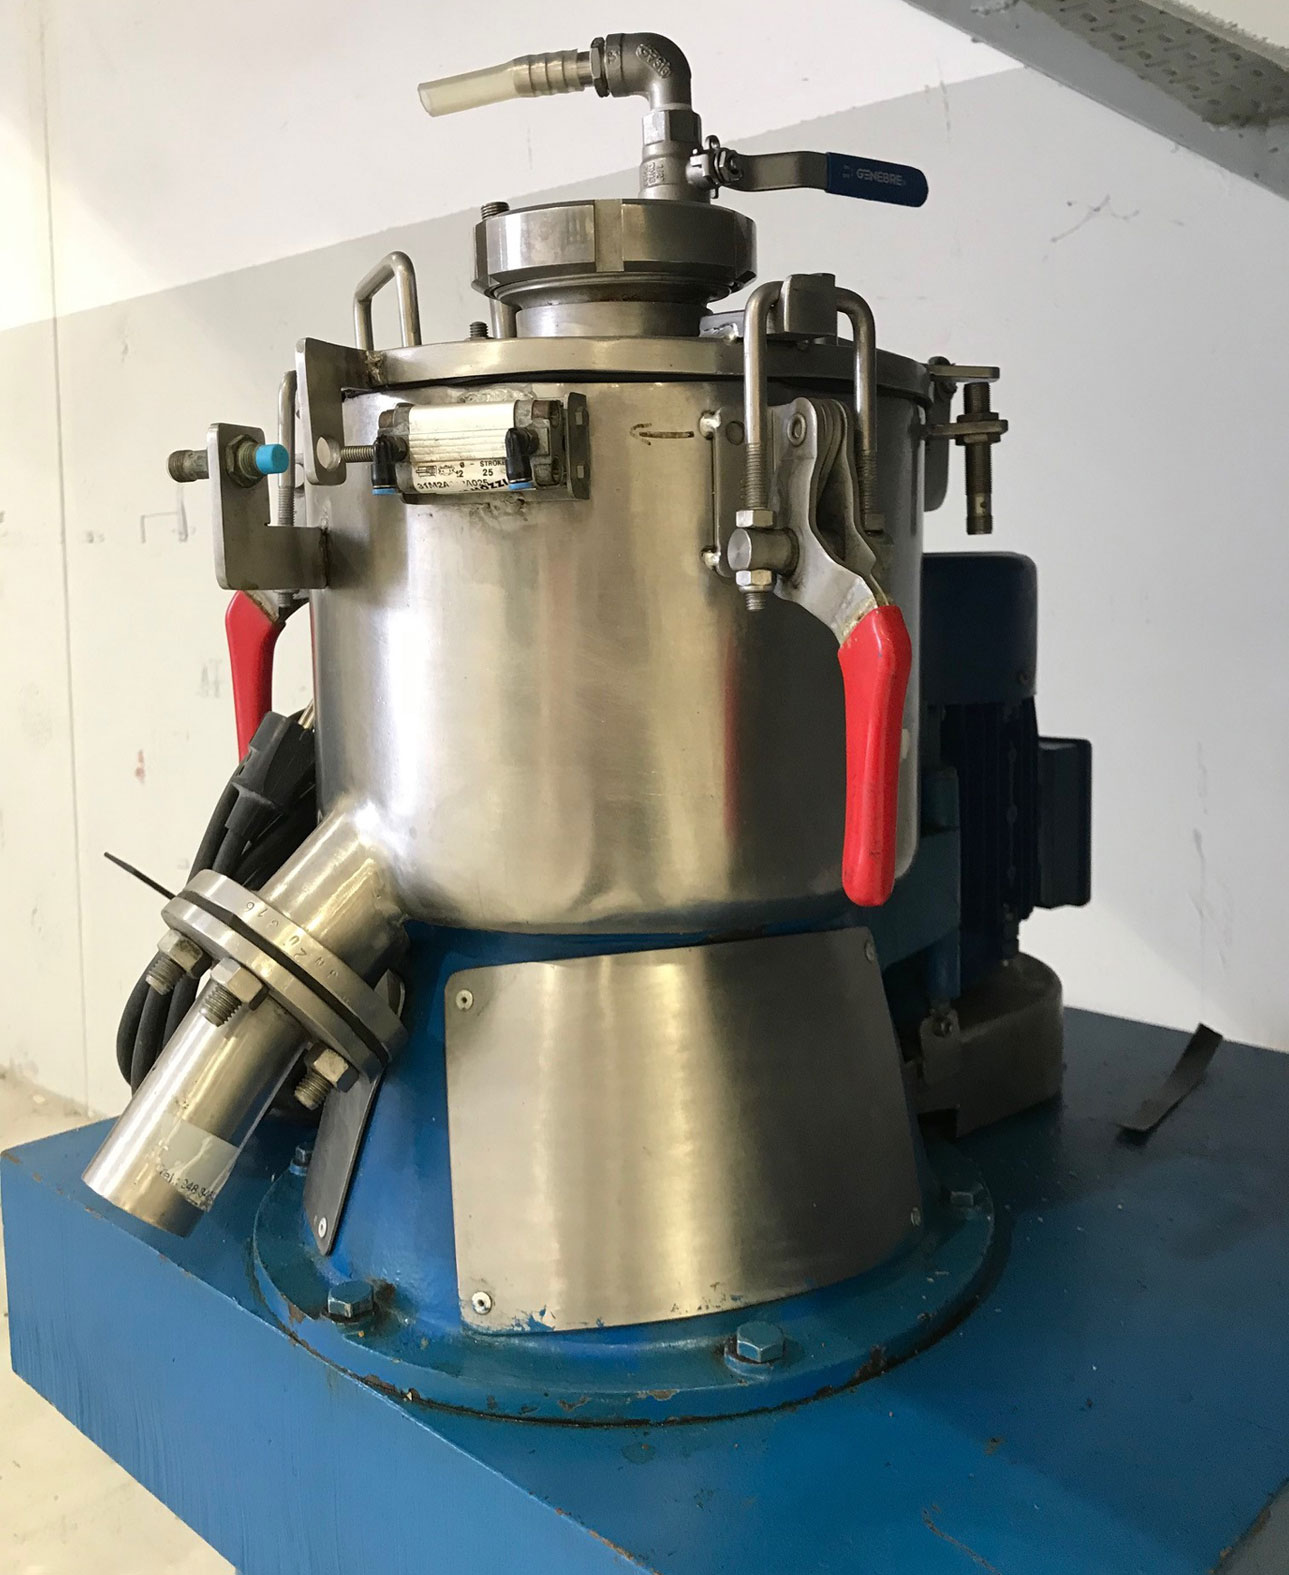 Fabricacion centrifugas RT 2 2 - CENTRIFUGA LABORATORIO RT-2 EN ACERO INOXIDABLE 1.4404 (316L)